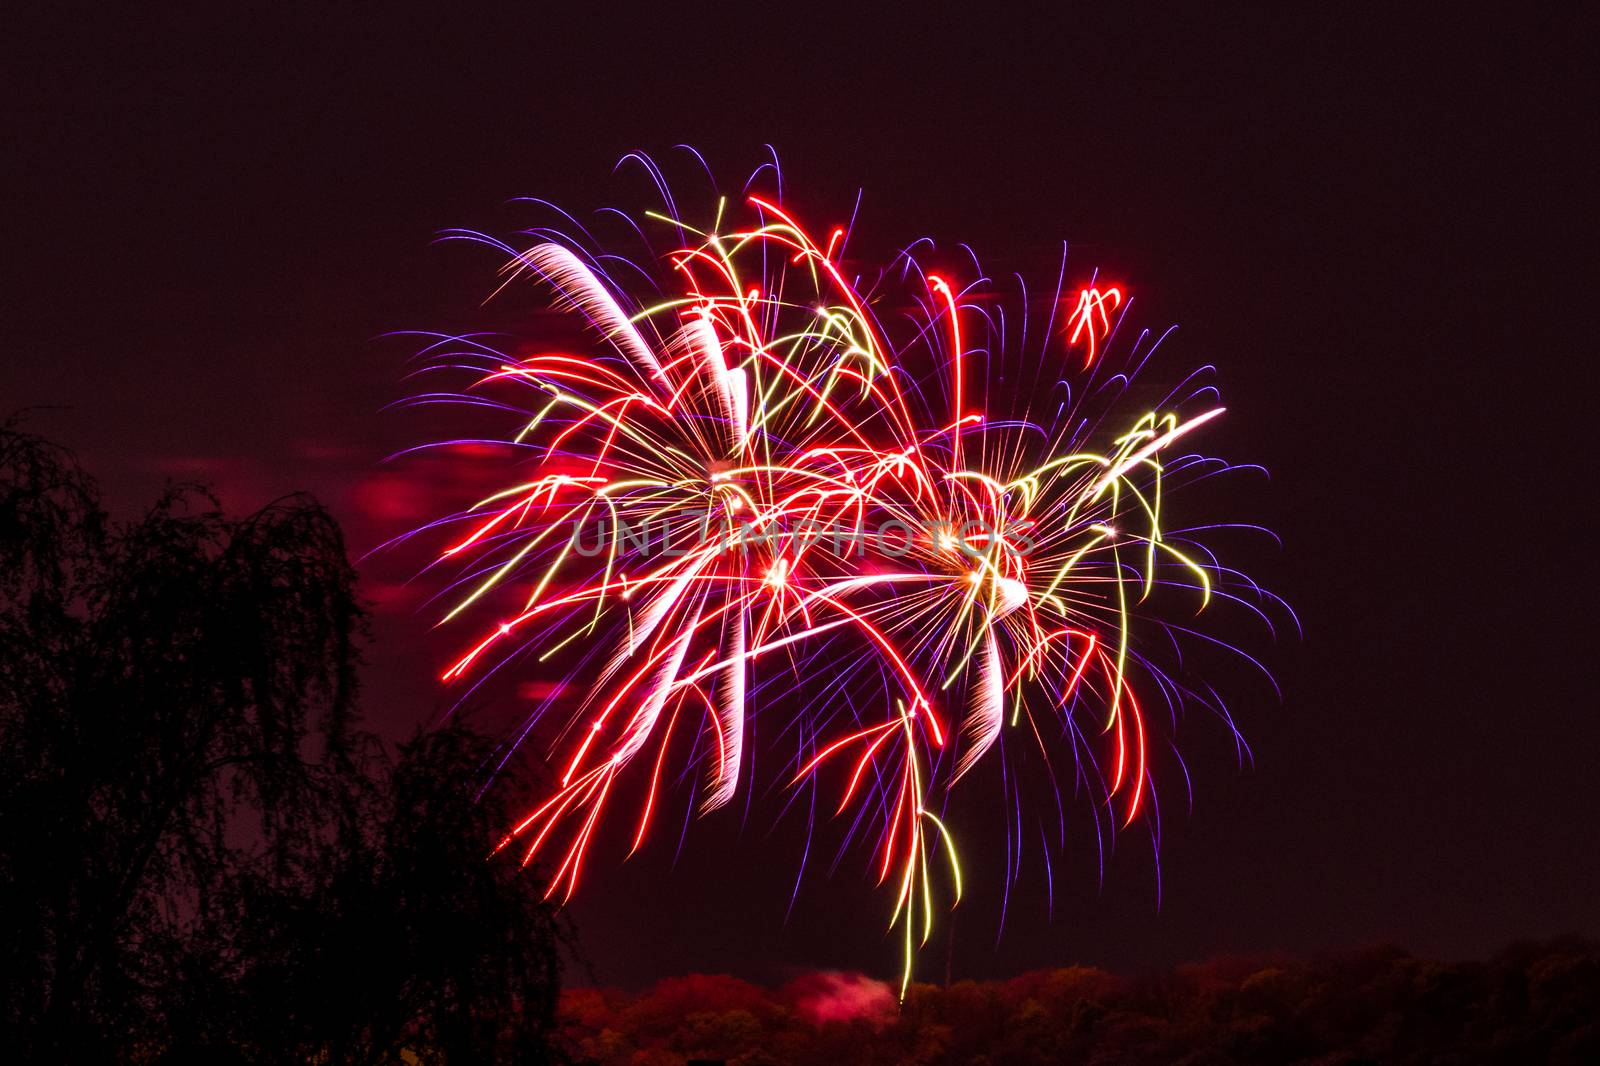 Firework fireworks celebration red purple orange blasts